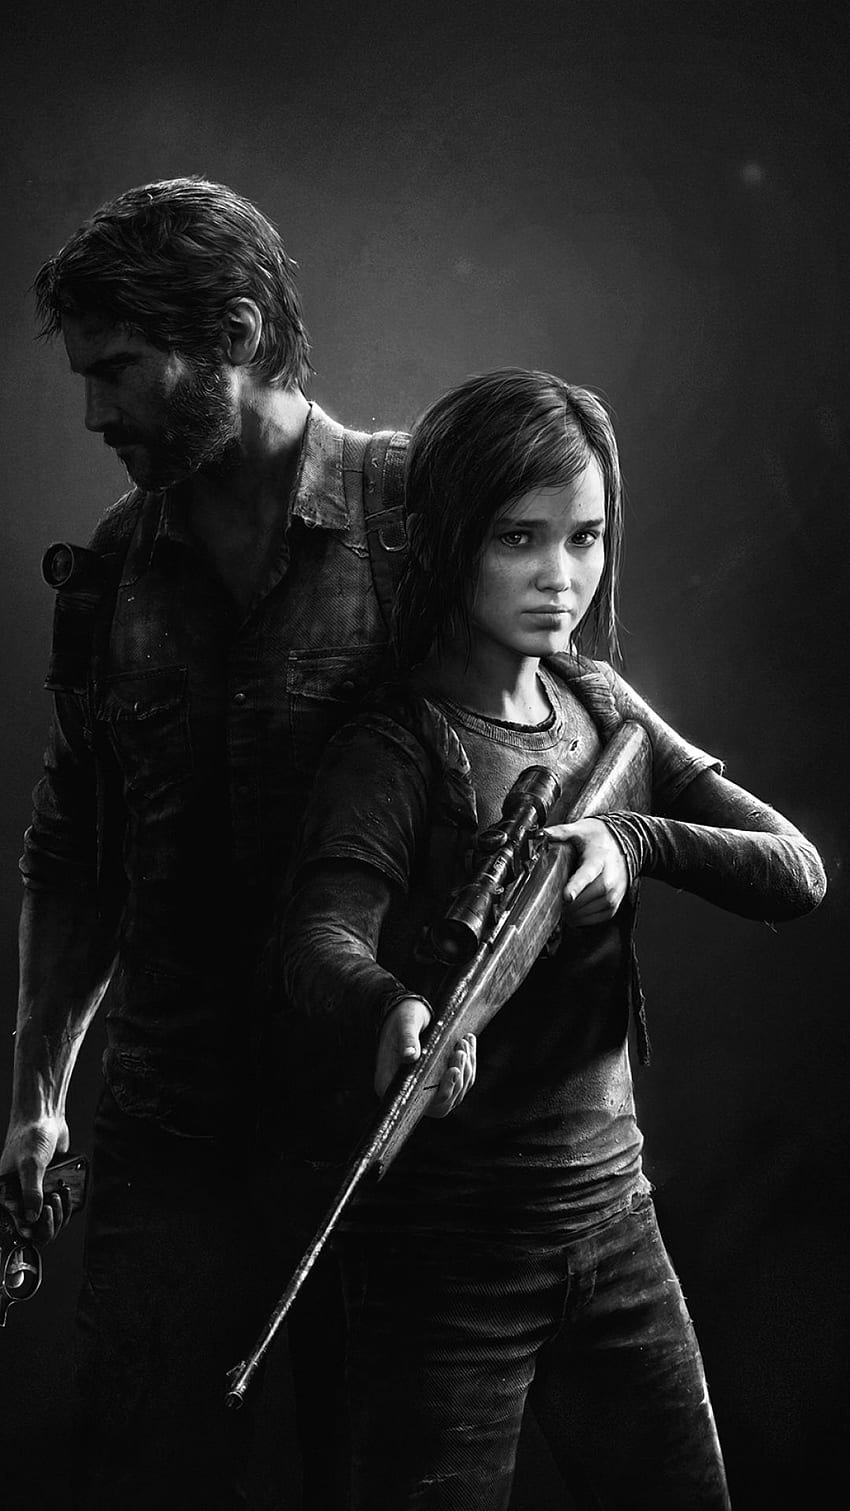 Plano de fundo de Black Ops 2 para dispositivos móveis - Last Of Us, The Last of Us Part 2 Papel de parede de celular HD